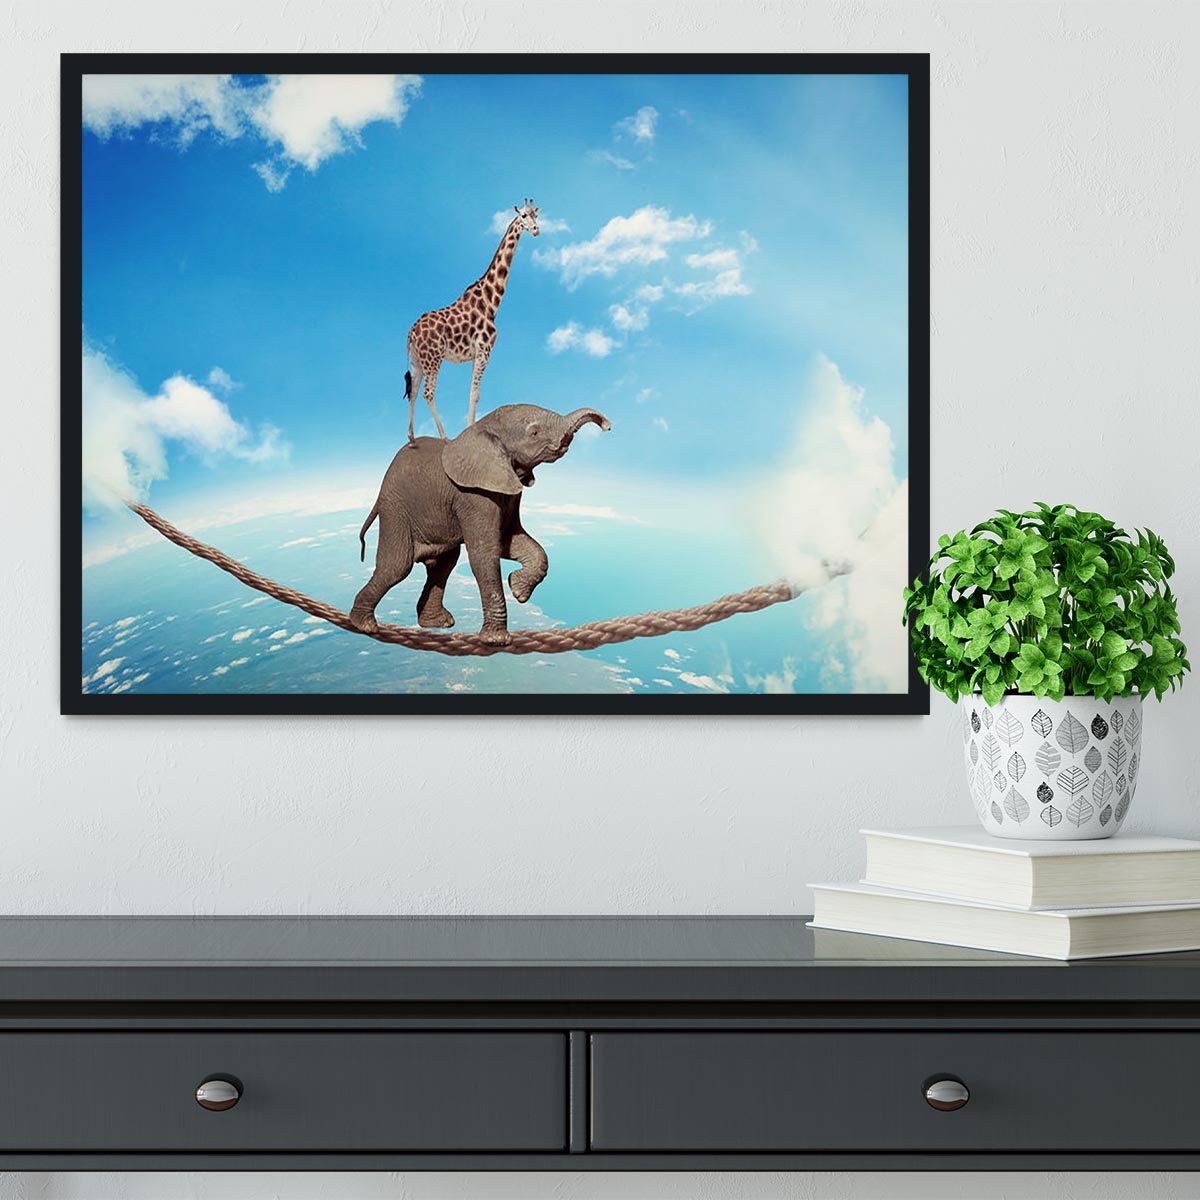 Elephant with giraffe walking on dangerous rope high in sky Framed Print - Canvas Art Rocks - 2